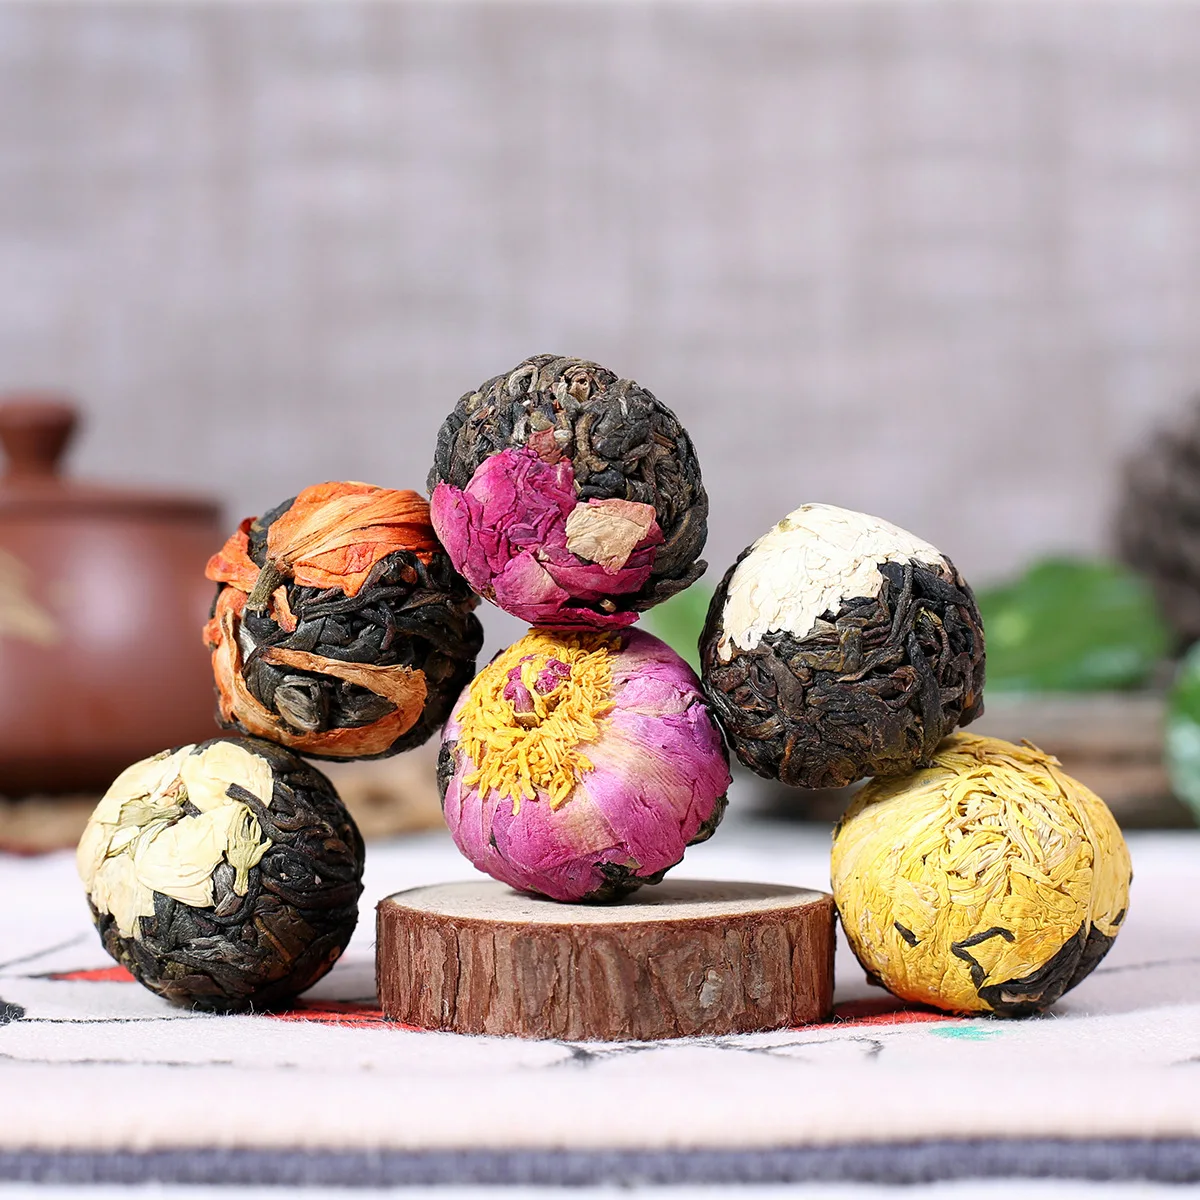 
Chinese Beautiful Blooming Tea Different Kinds of Blooming Tea Ball Handmade Packaging Organic Detox Flower Tea Ball 